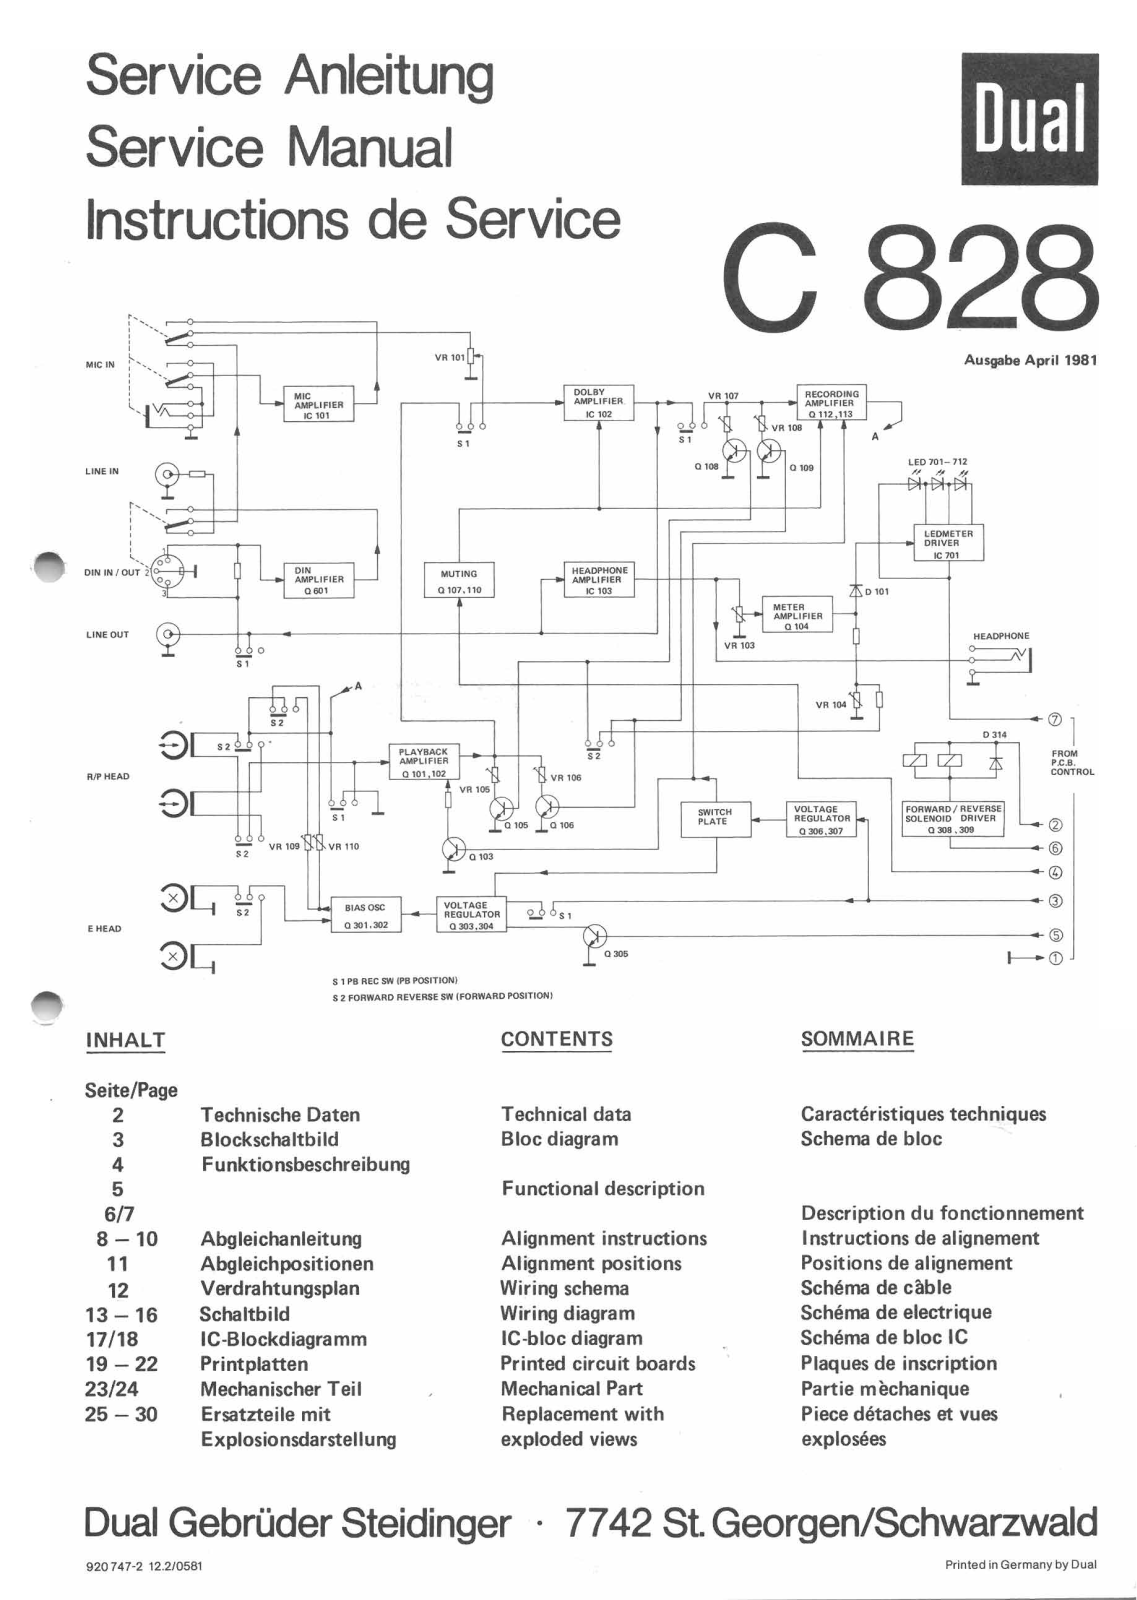 Dual C-828 Service Manual